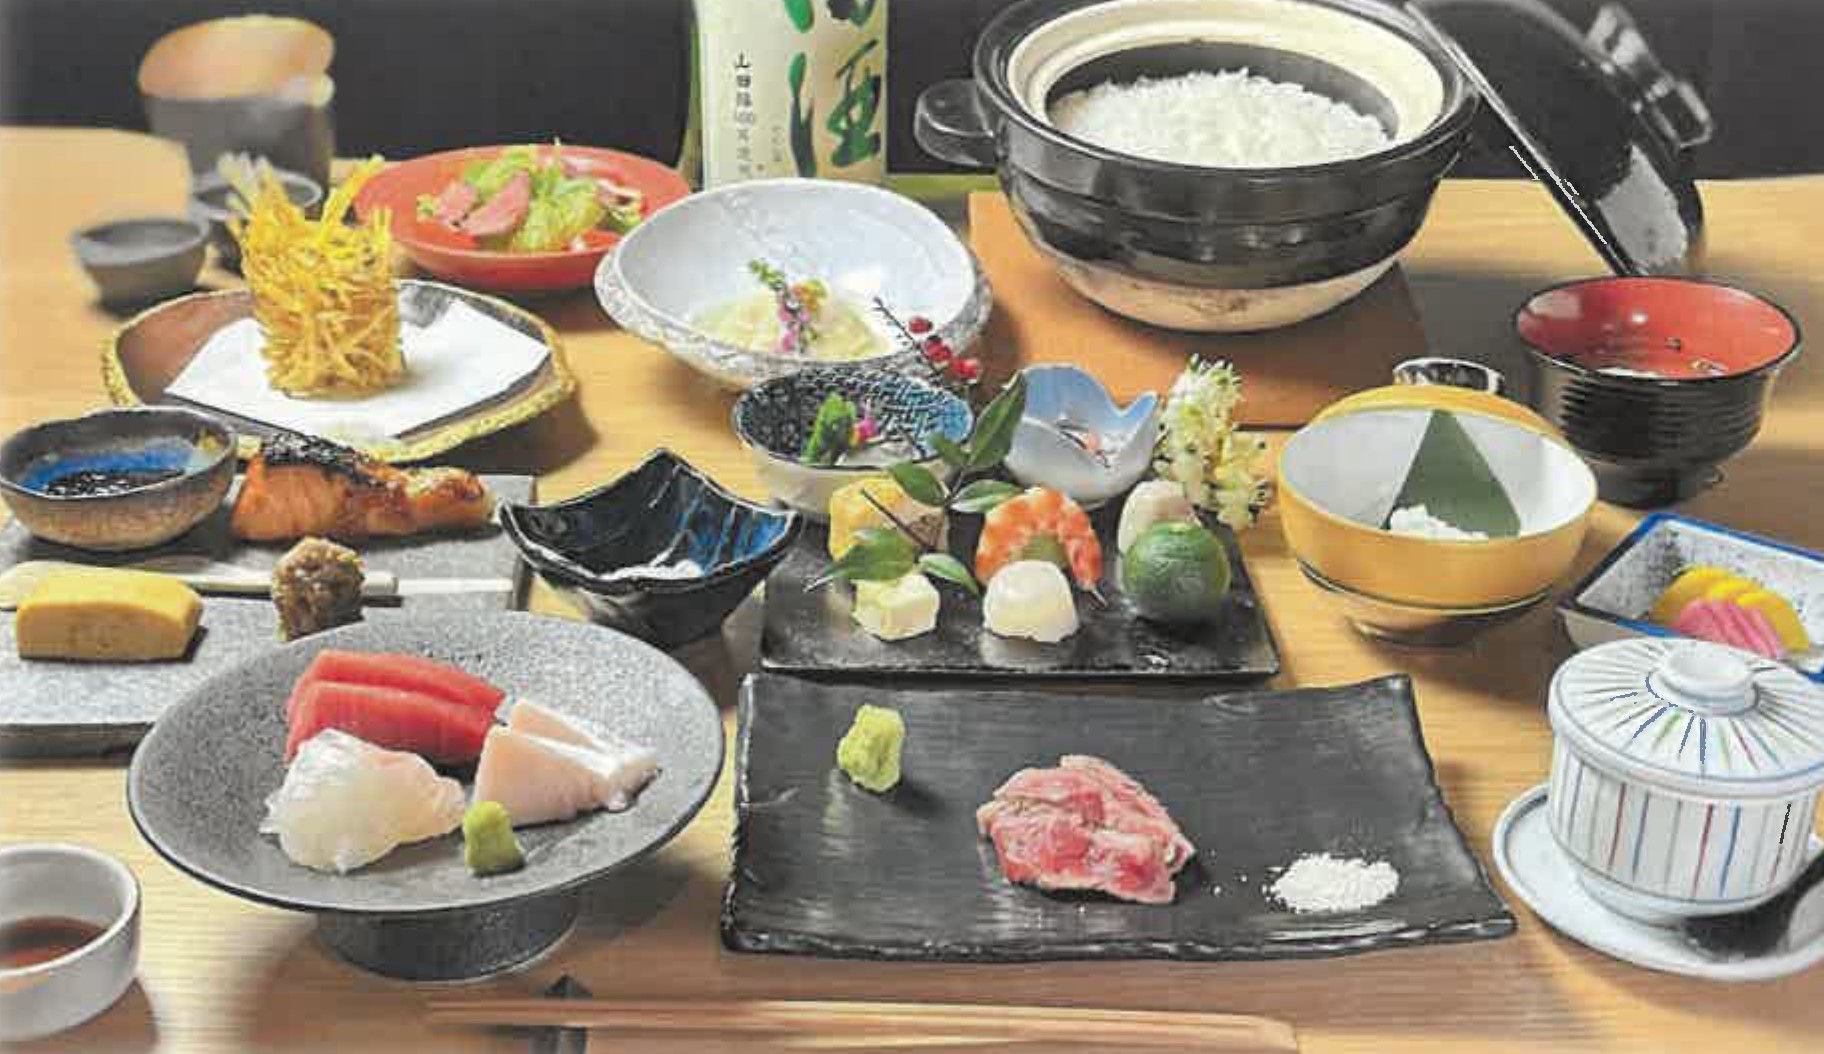 Niku to Sakana Second Class Tokyo_Rice cooked in a pot travel course